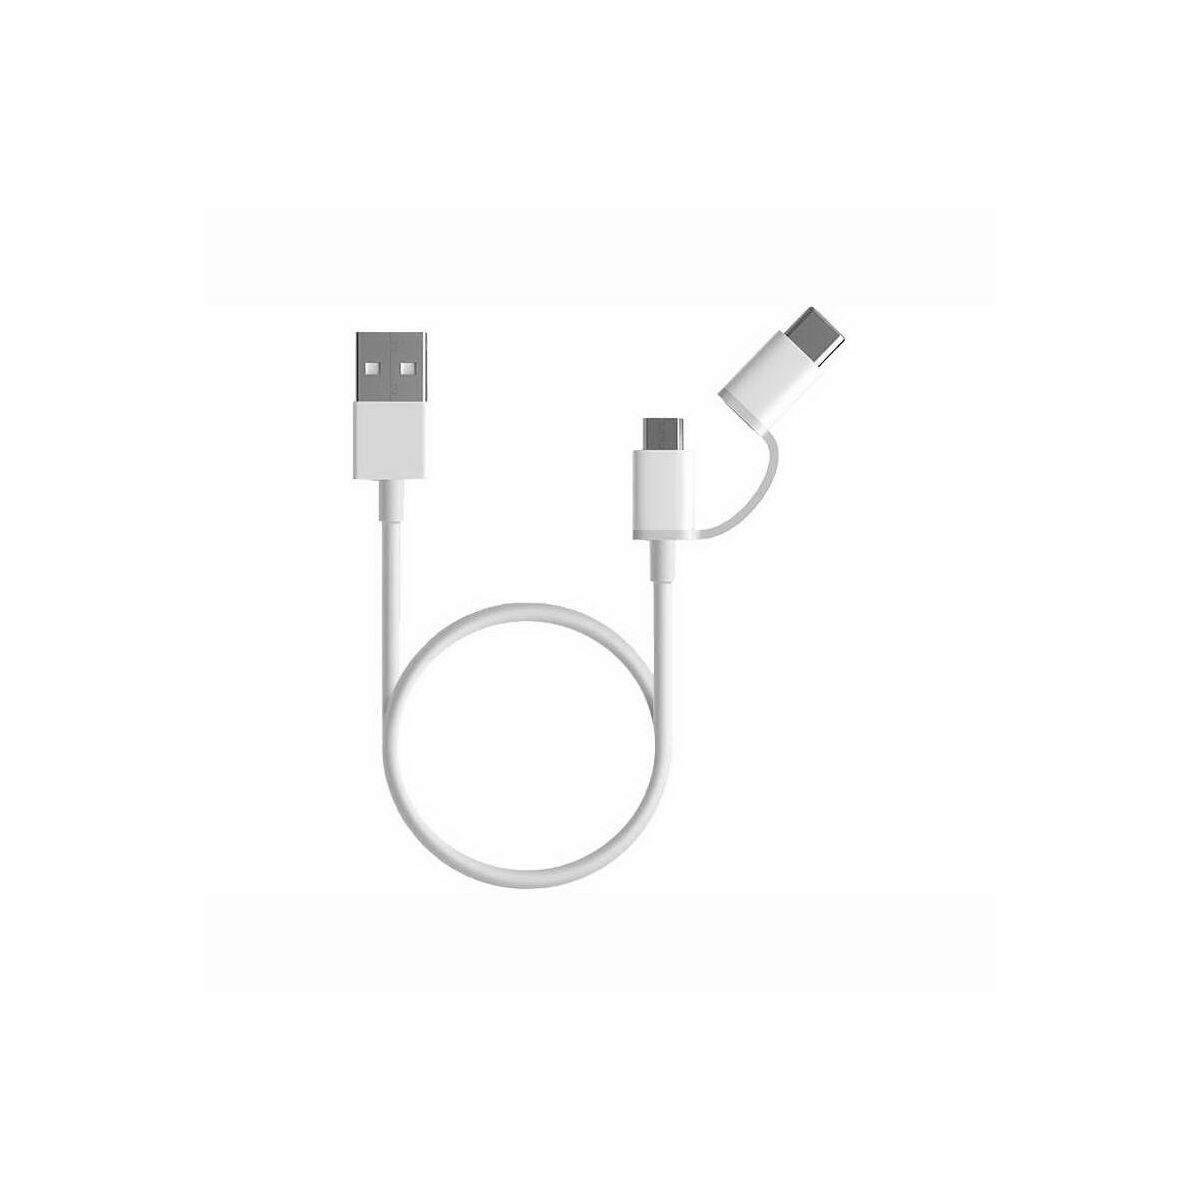 Xiaomi Mi USB kábel 2-in-1 (Micro USB és Type C) 30 cm fehér EU SJV4083TY 